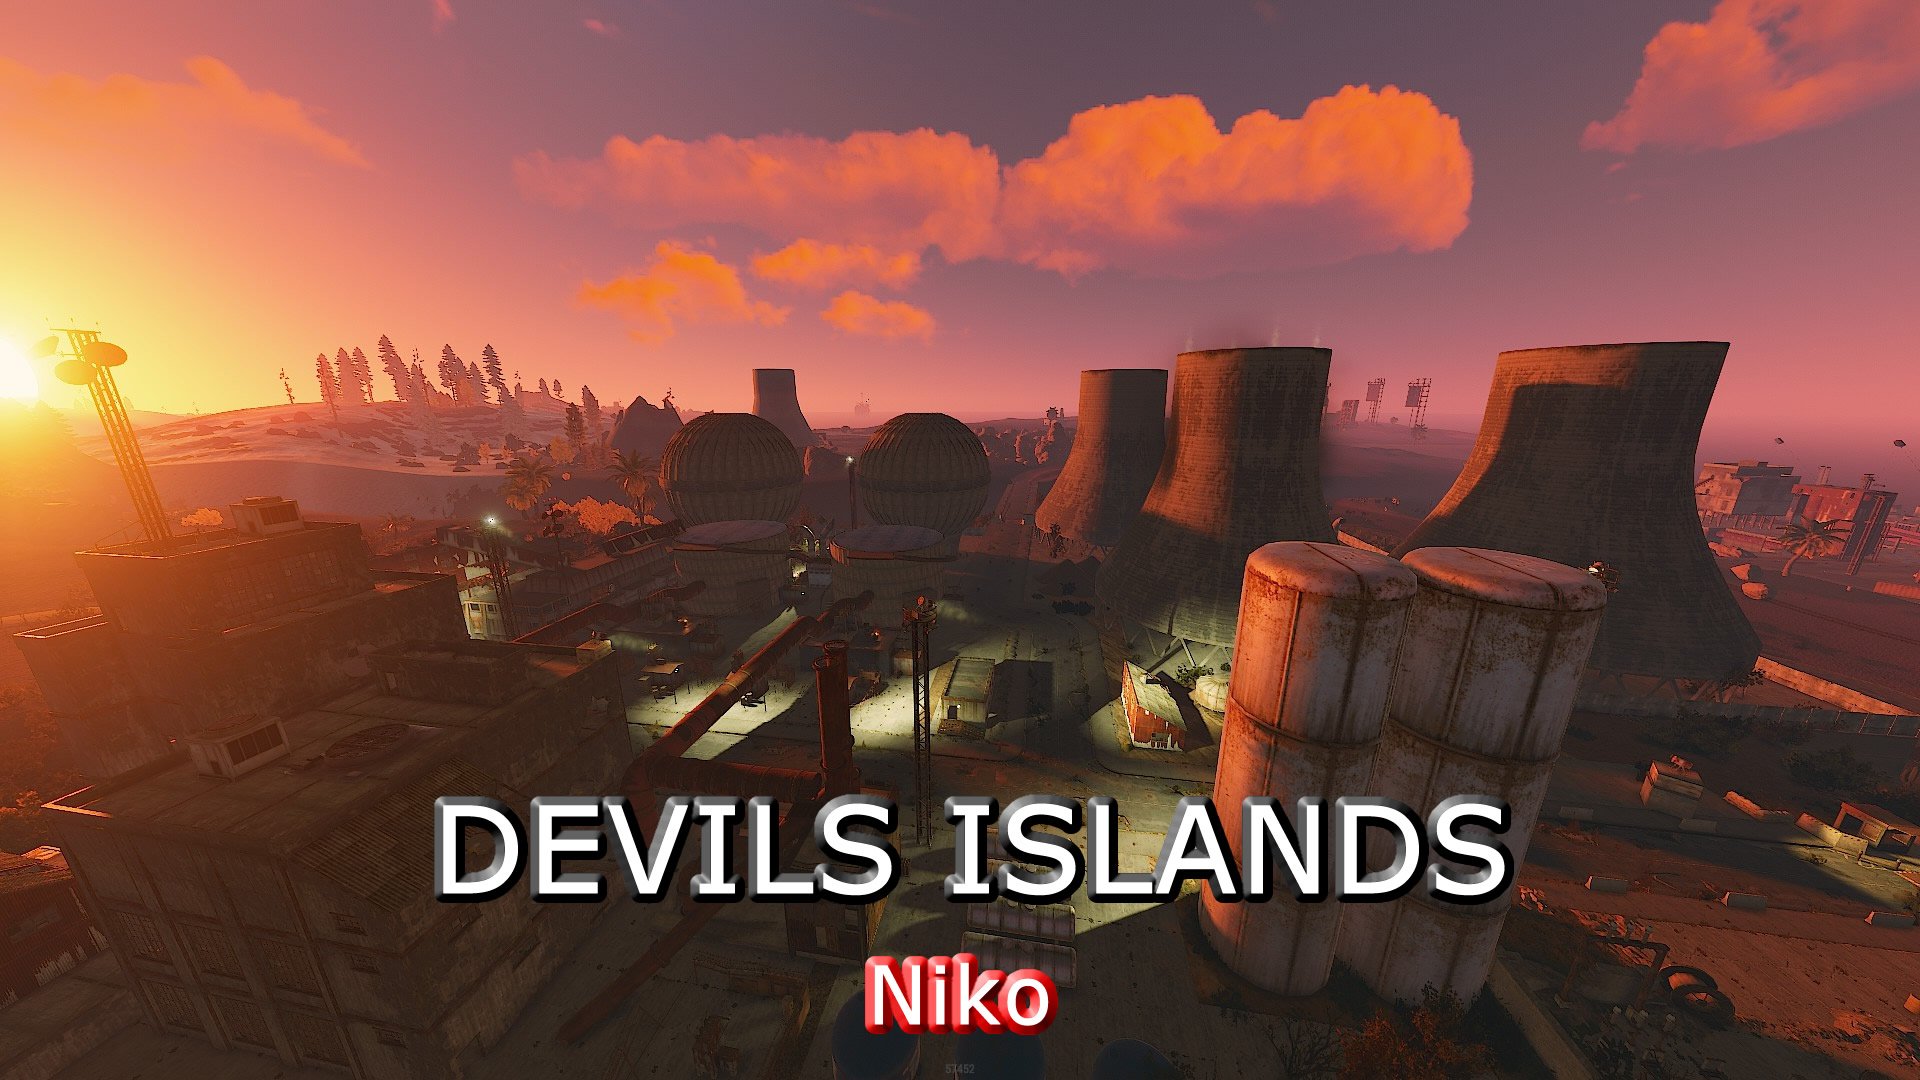 Devils Islands by Niko